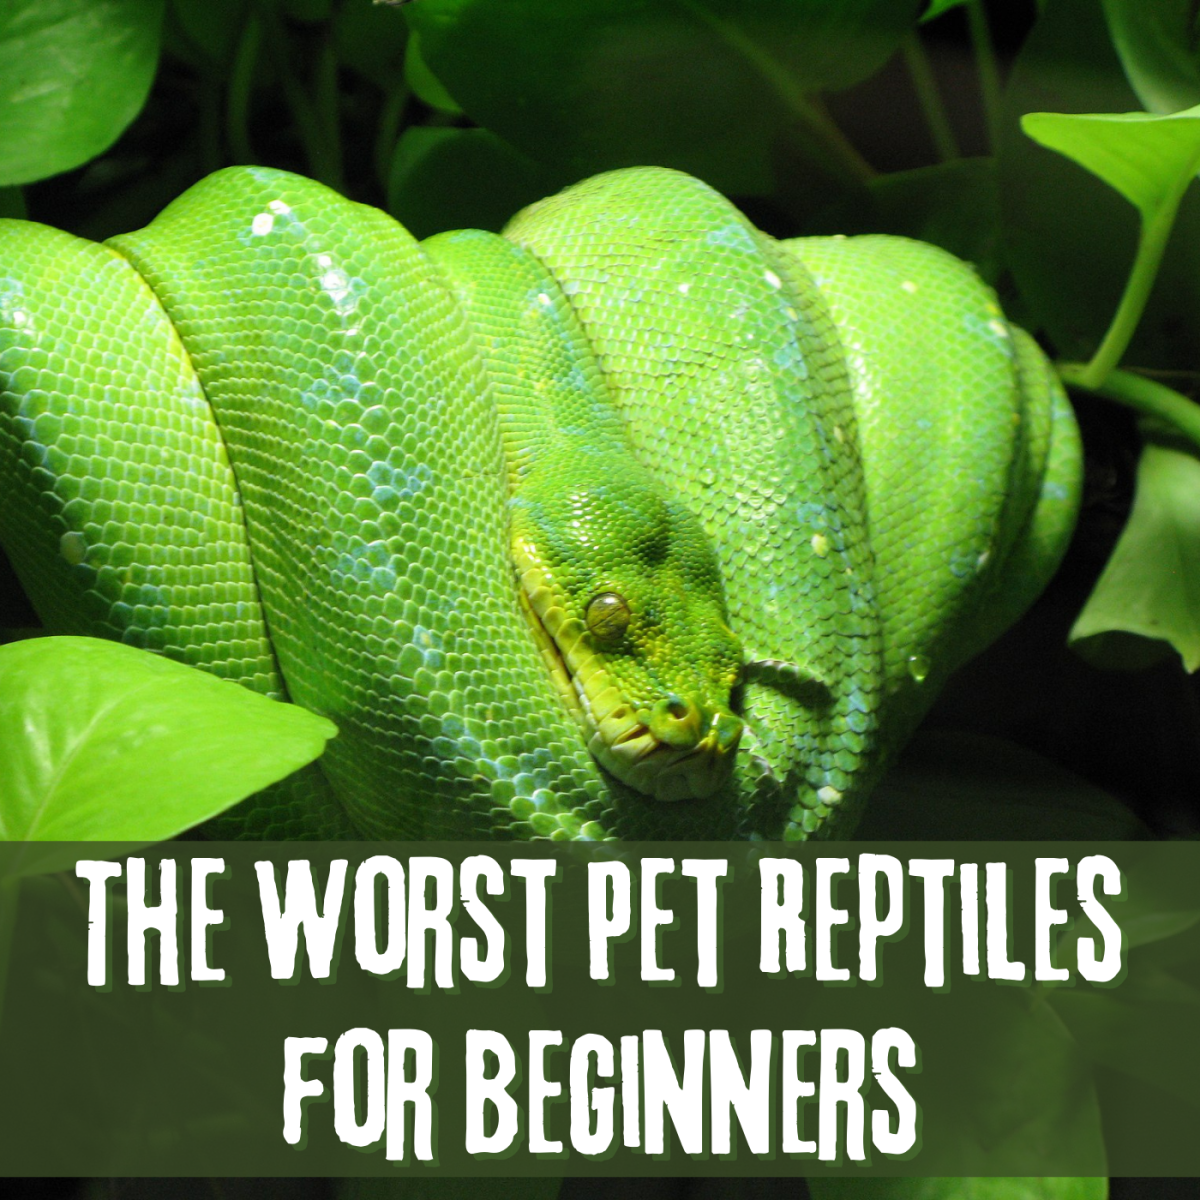 9 Worst Pet Reptiles for Beginners